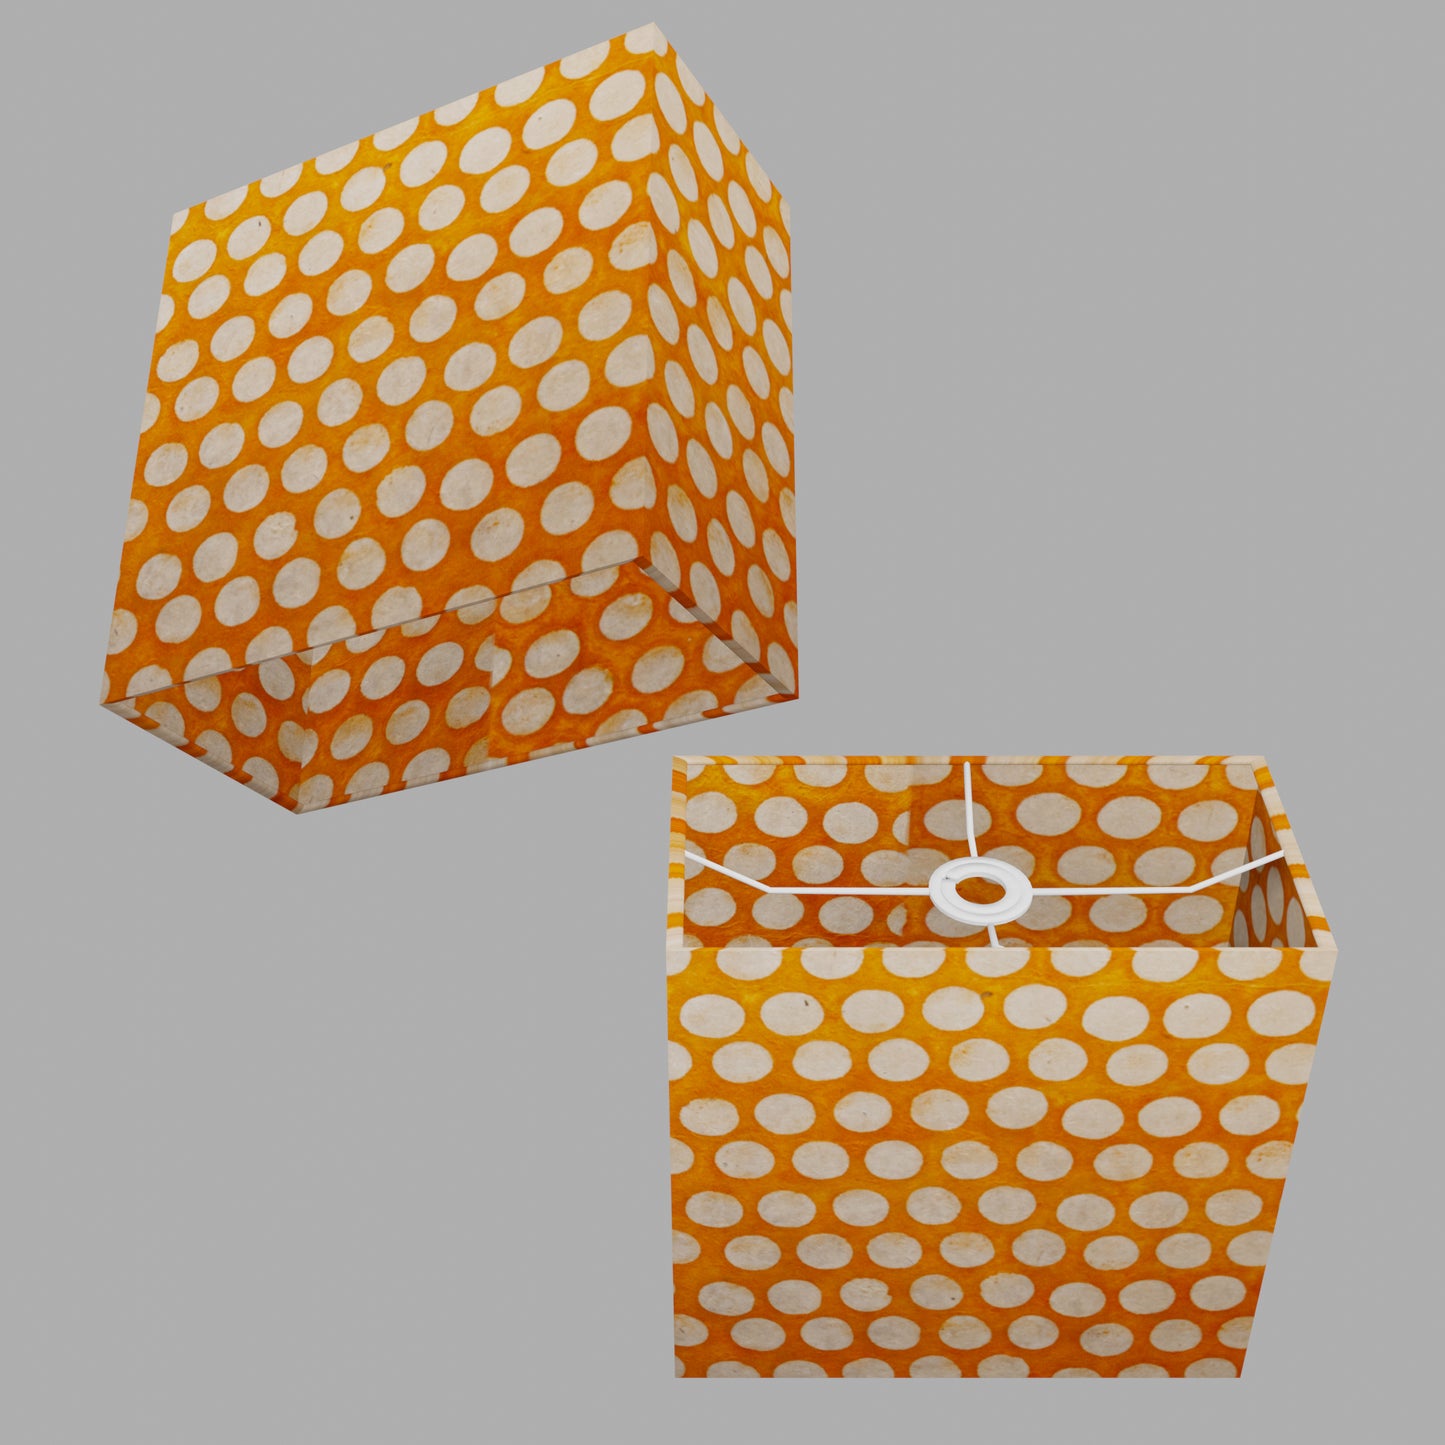 Rectangle Lamp Shade - B110 ~ Batik Dots on Orange, 30cm(w) x 30cm(h) x 15cm(d)